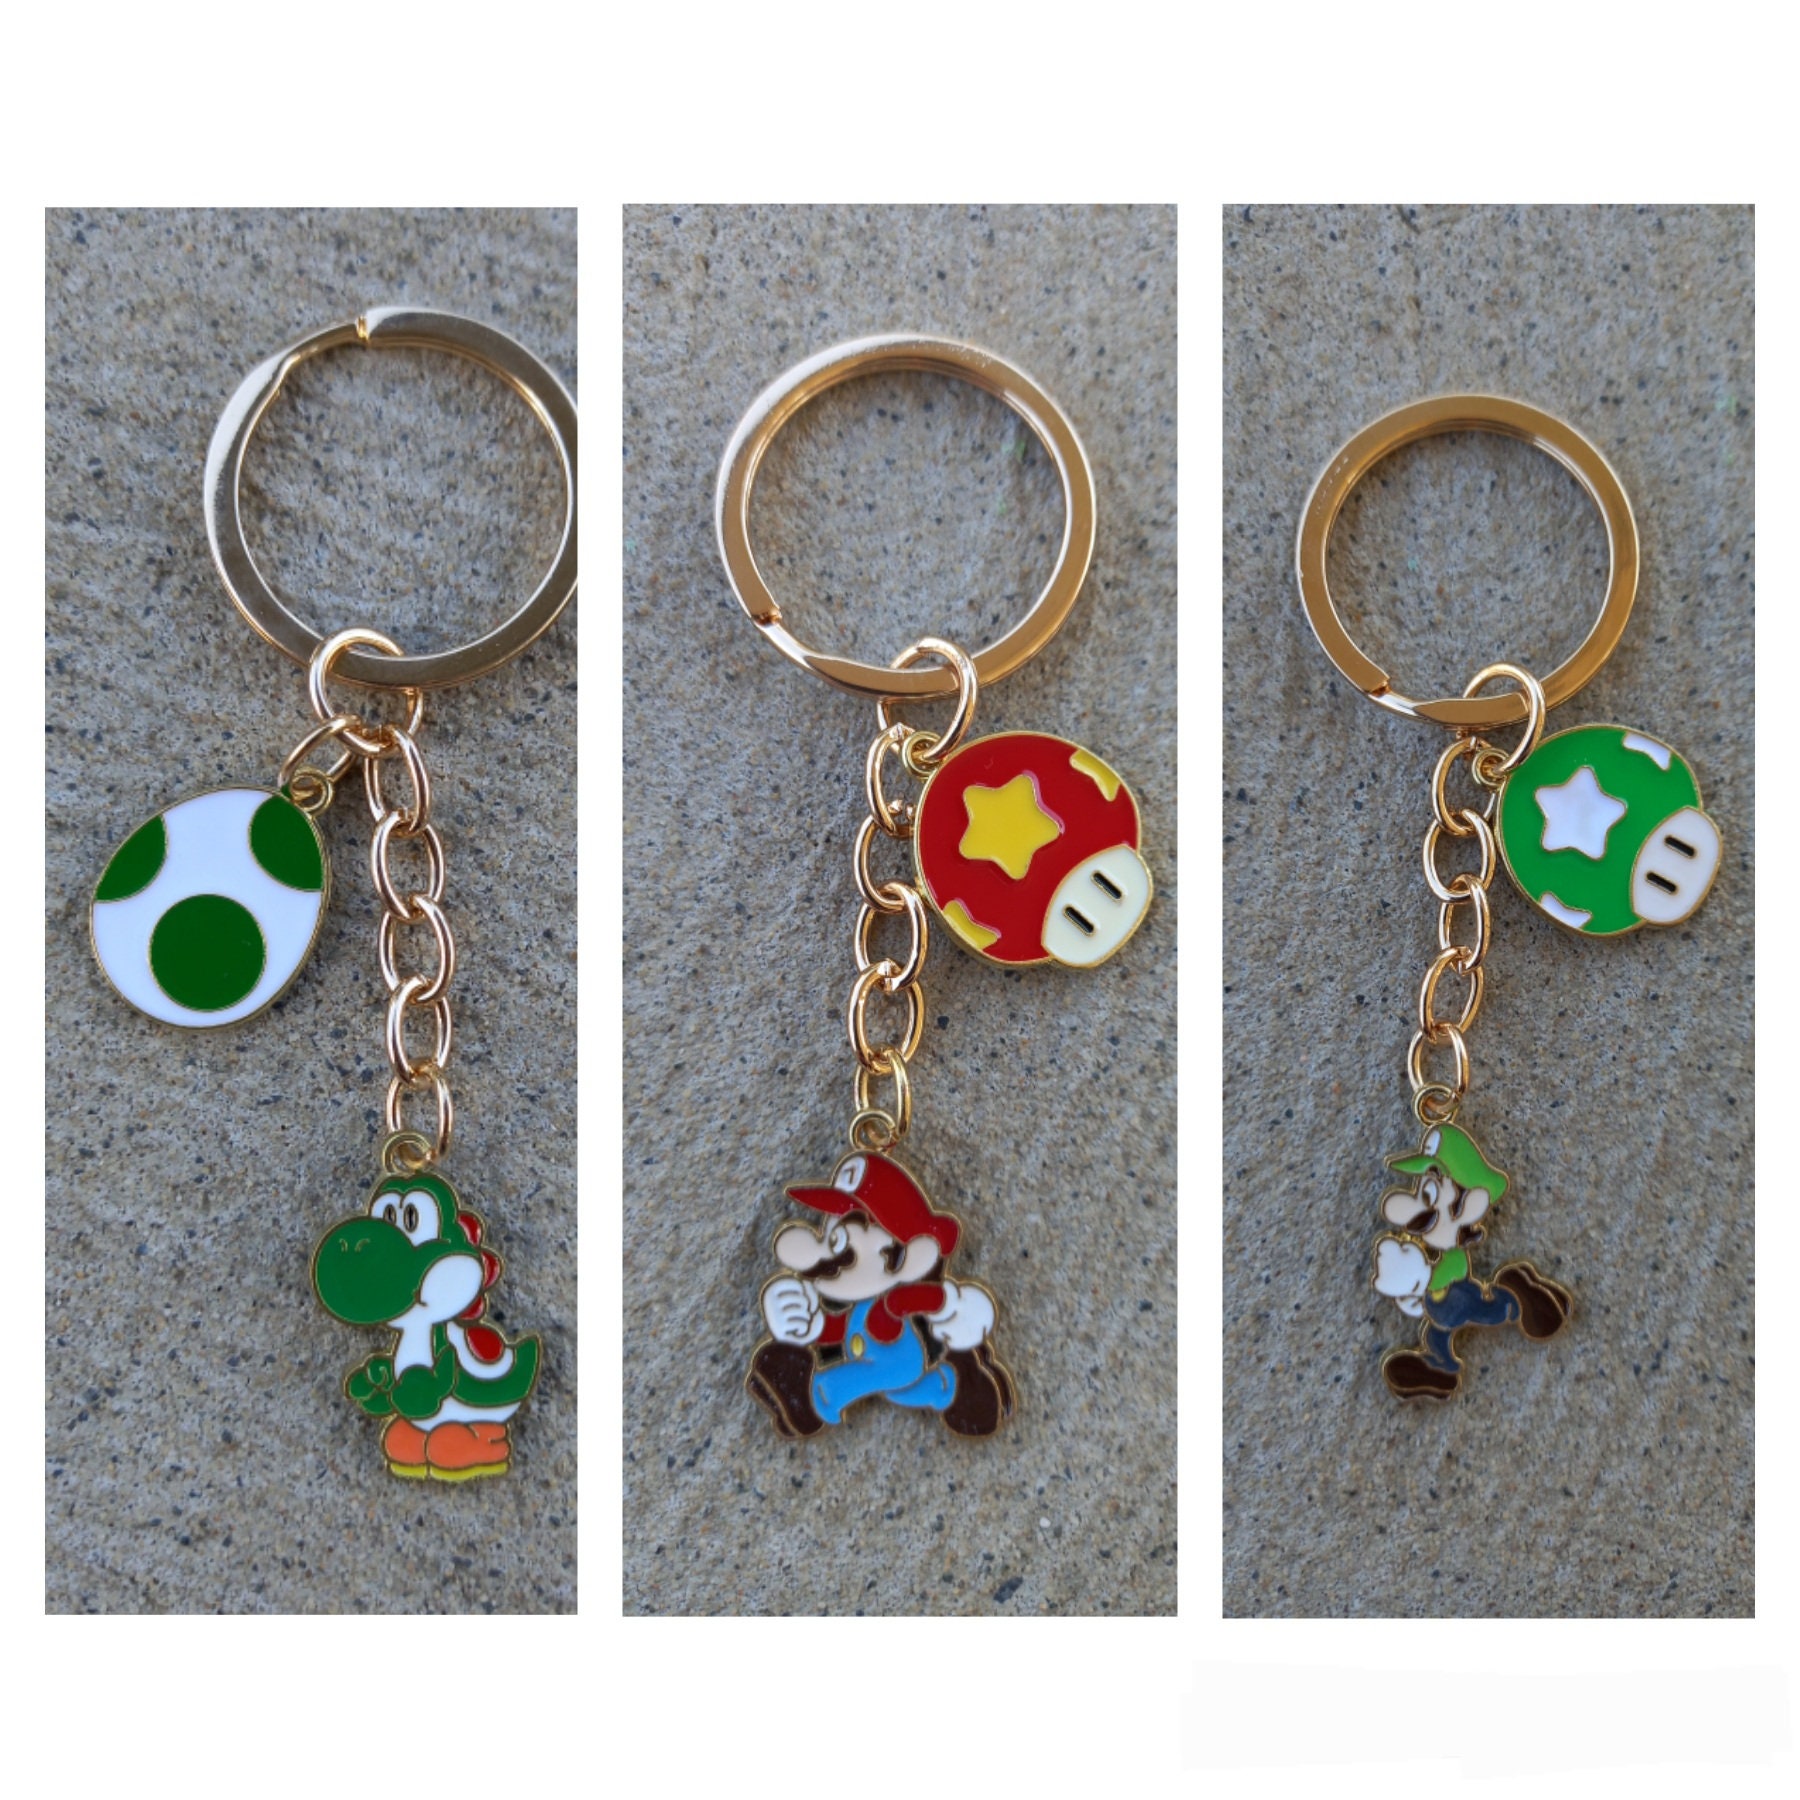 Super Mario Brothers Inspired Keychain - Cartoon Anime Mario Yoshi